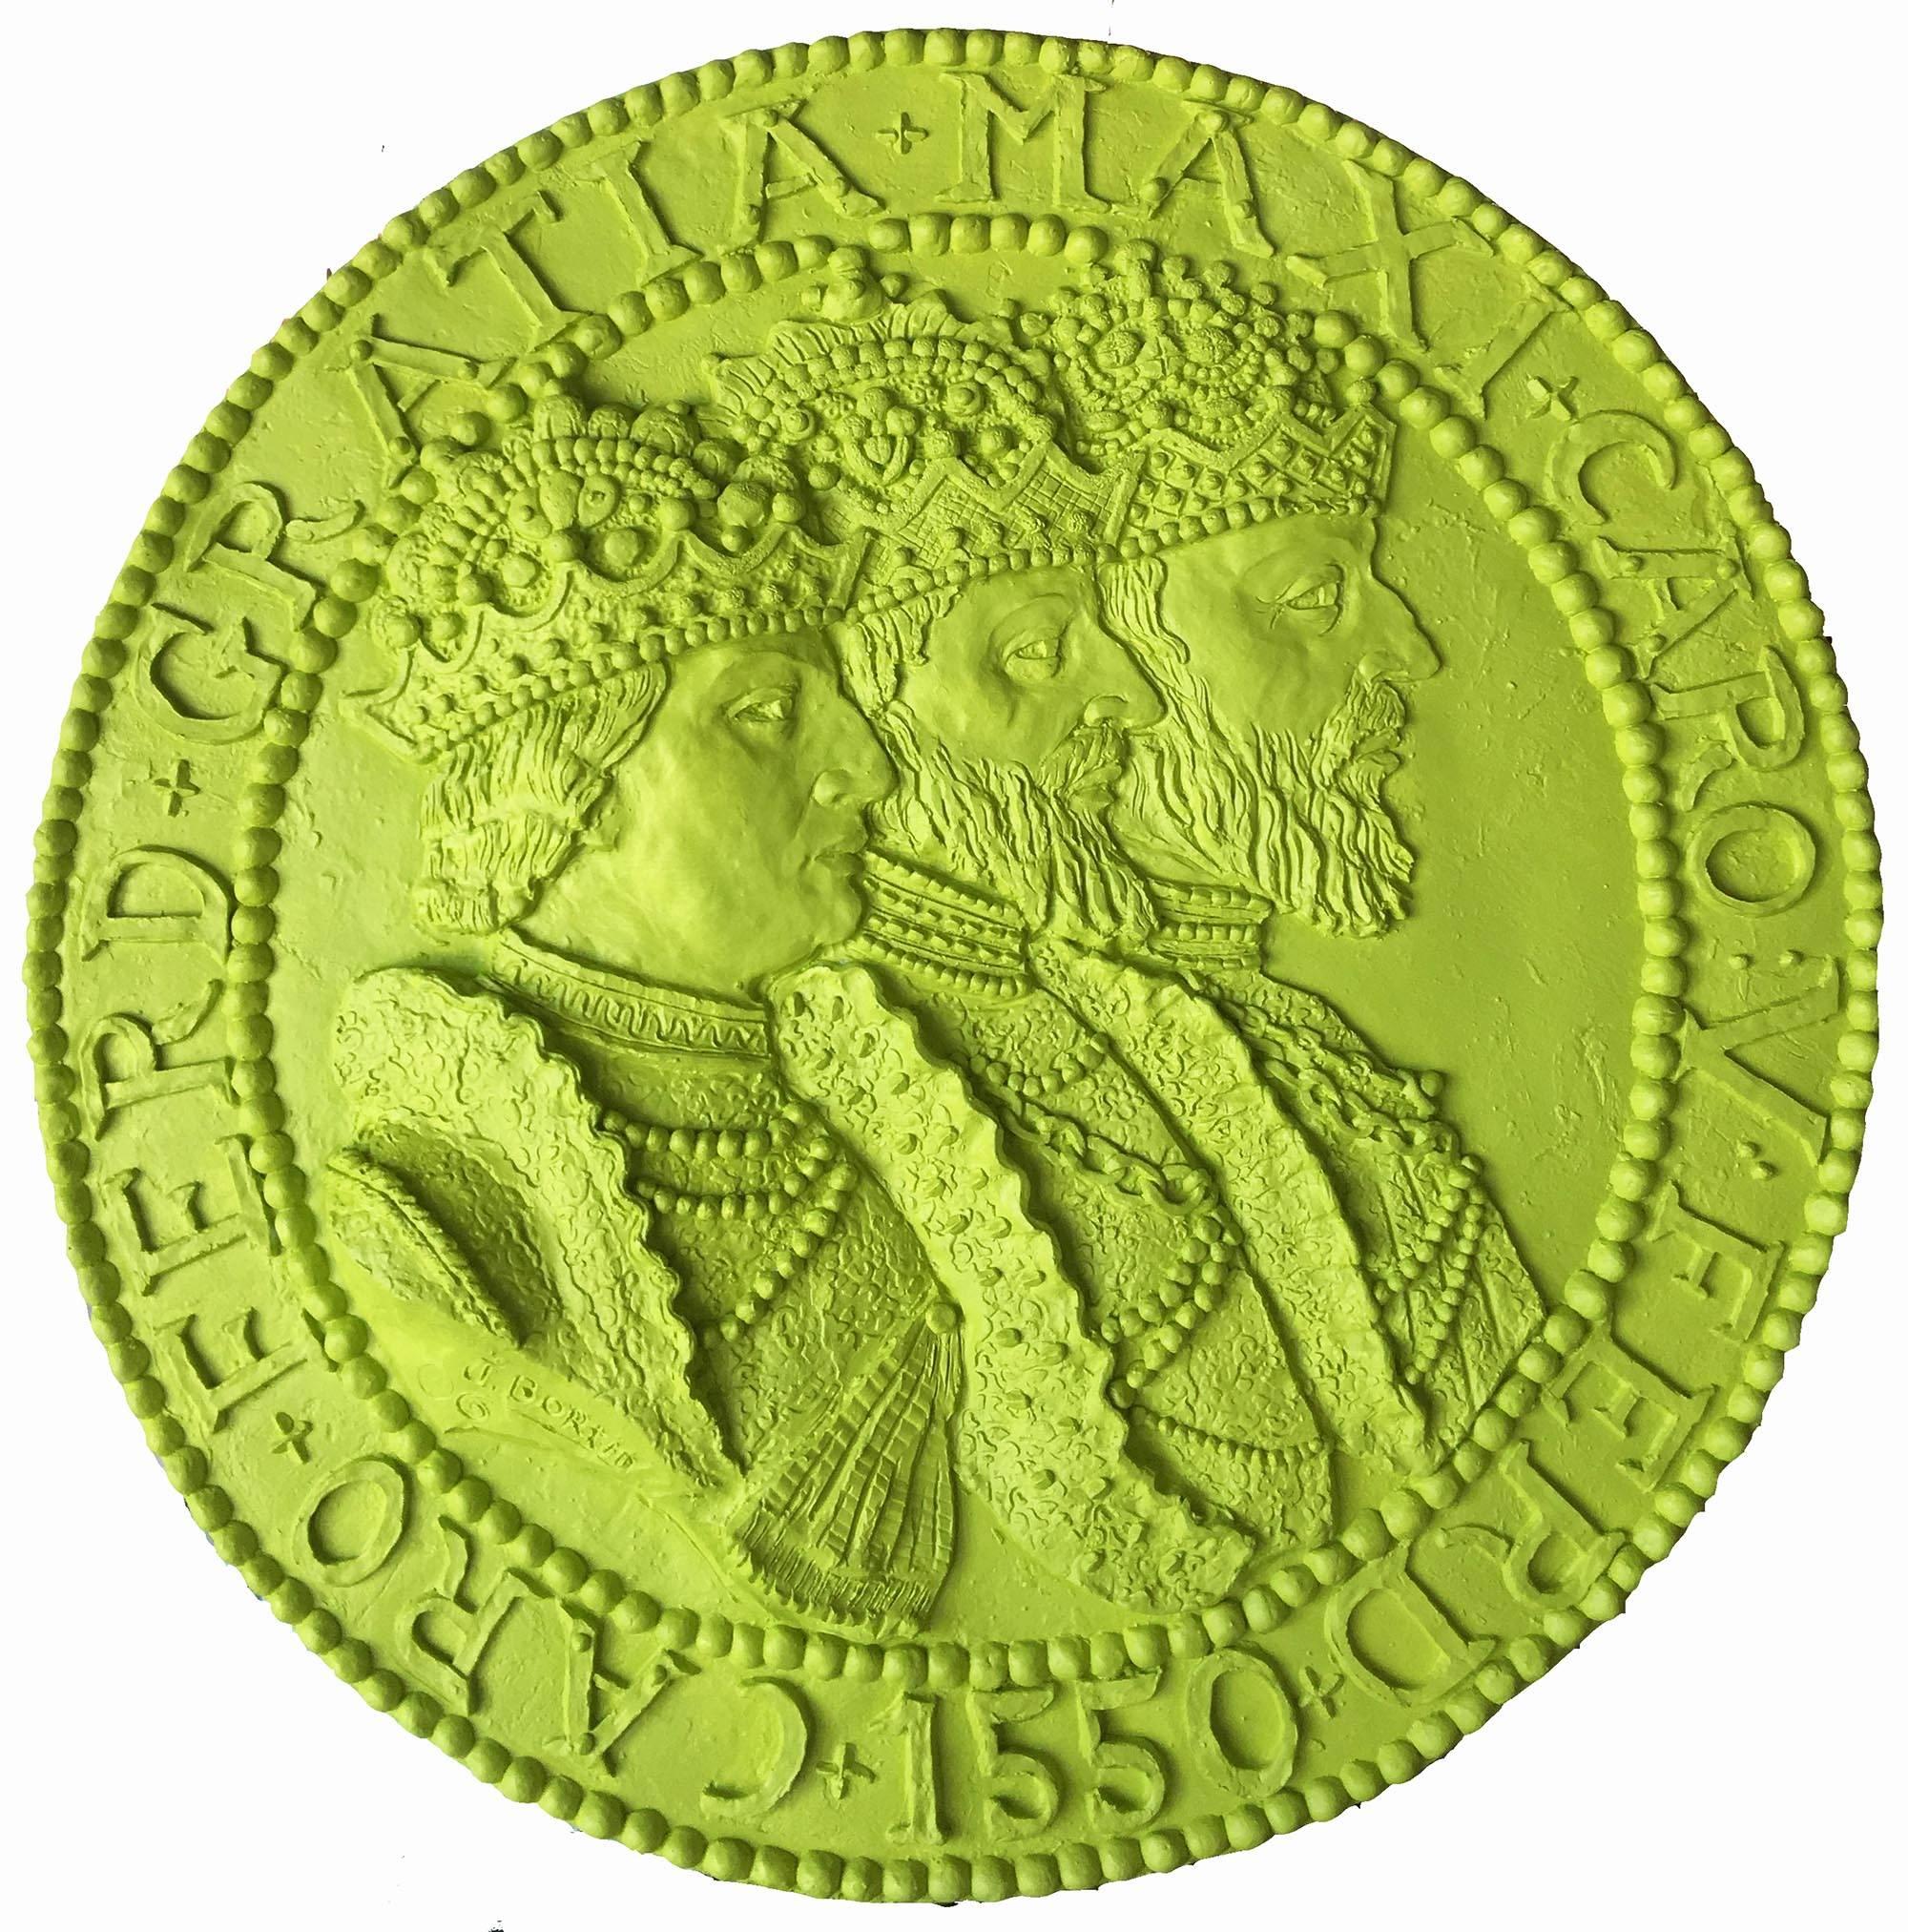 J. Bortin Figurative Sculpture - Three Kings Wall Coin